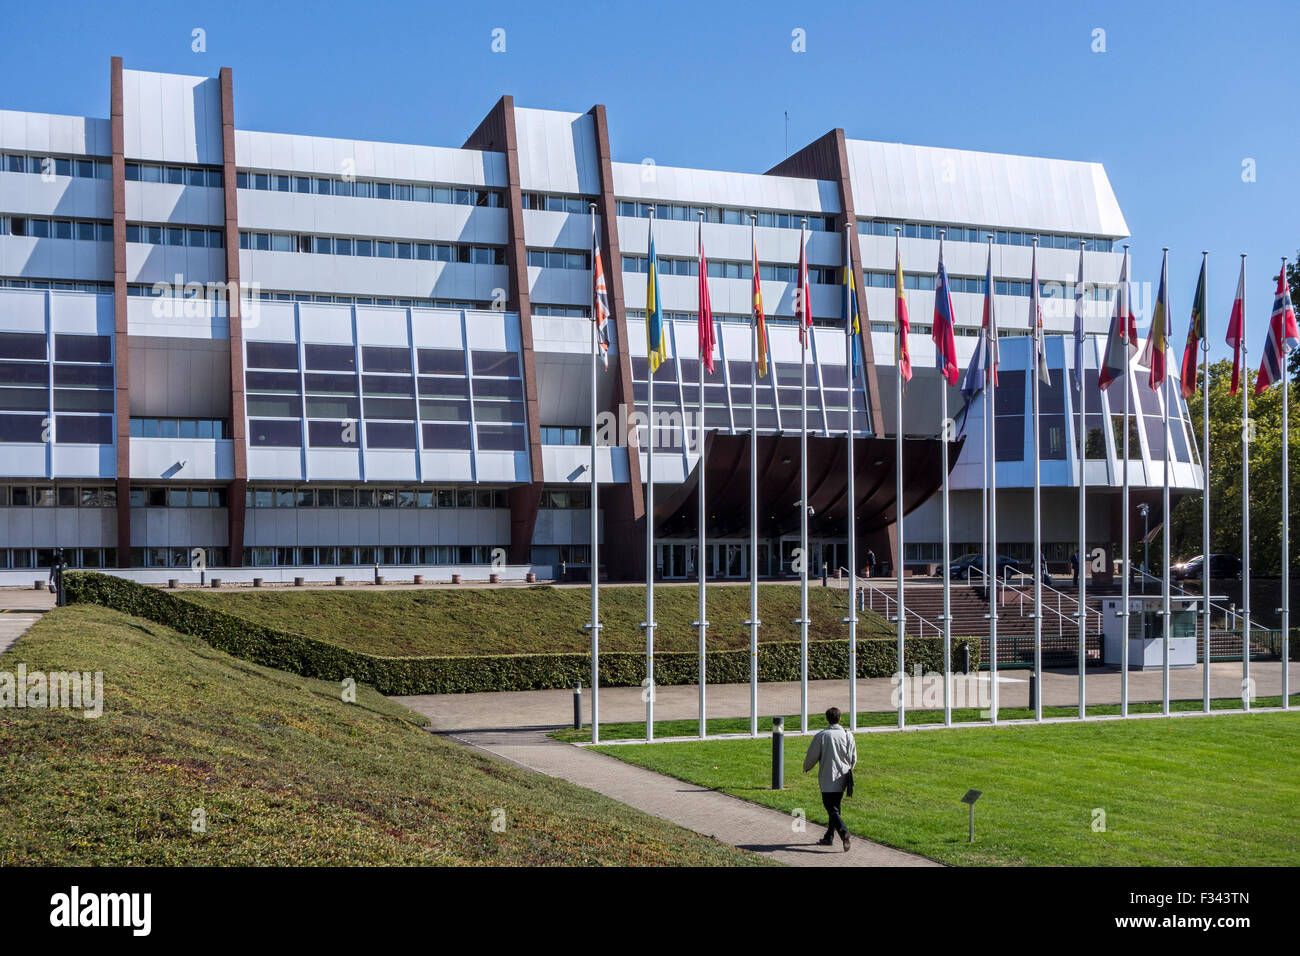 Sitz des Europarates / CoE / Conseil de l ' Europe in das Palais de l ' Europe in Straßburg, Frankreich Stockfoto